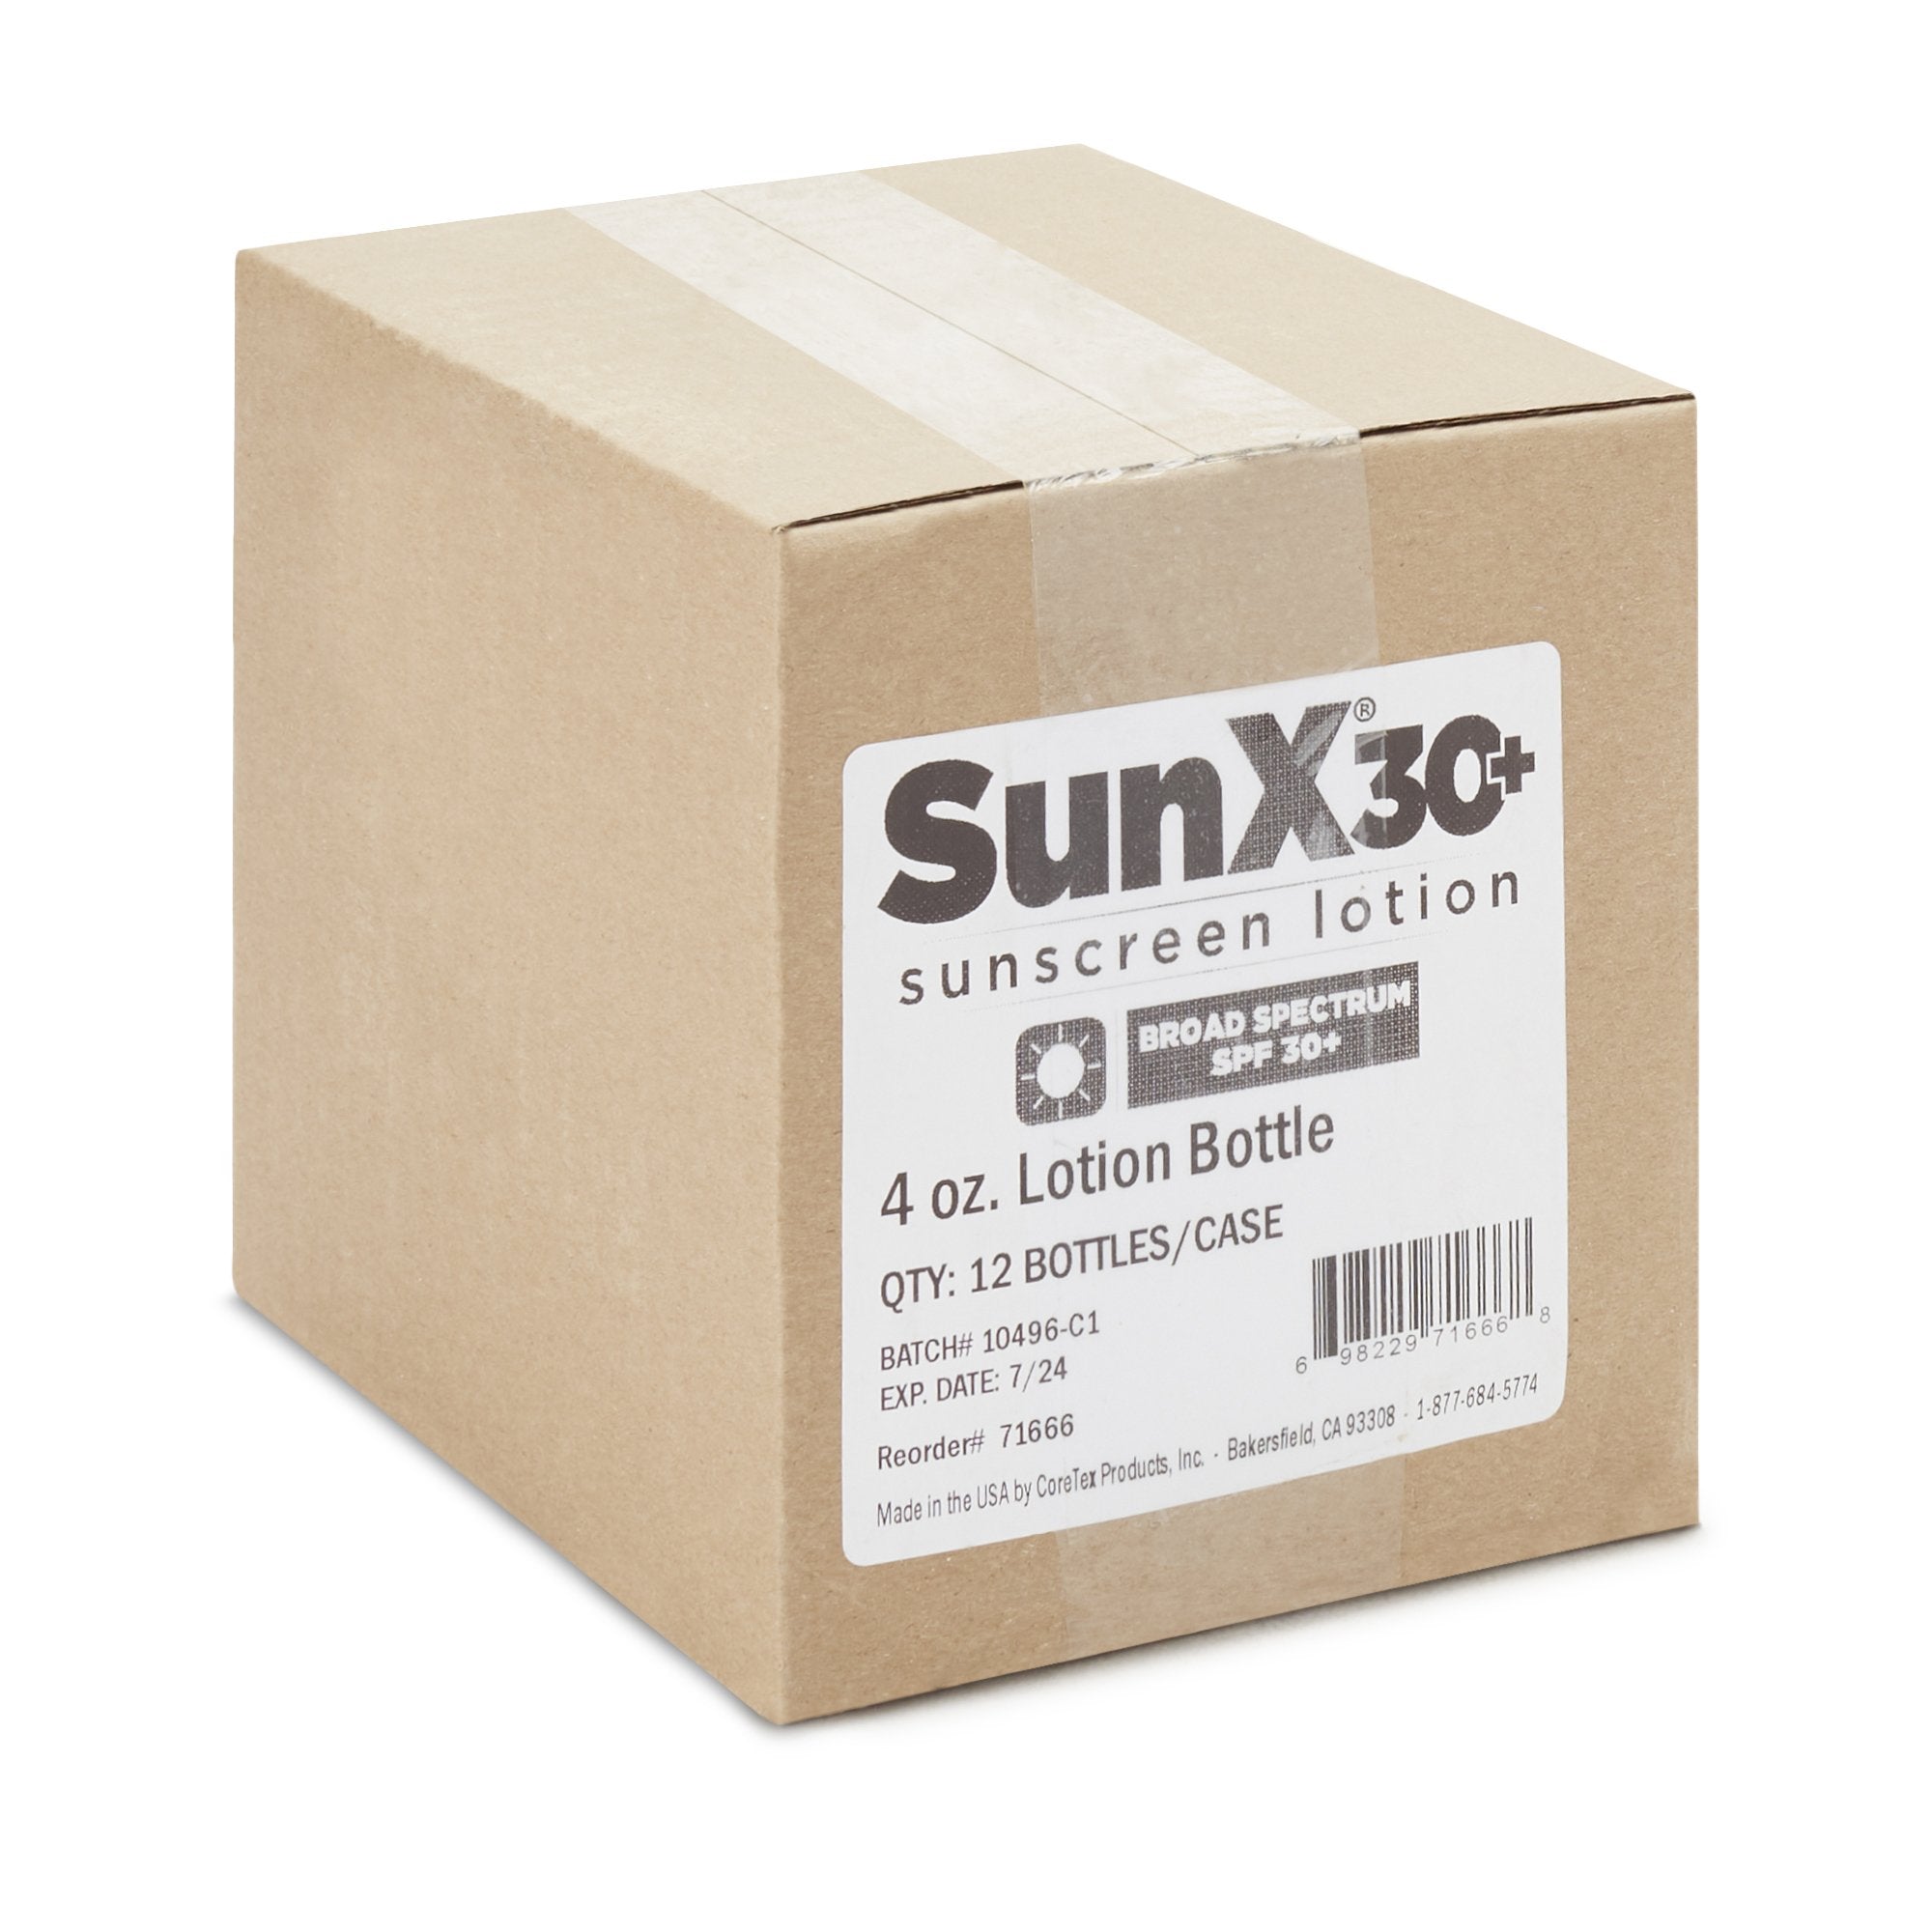 Sunscreen SunX 30+ SPF 30 Lotion 4 oz. Bottle